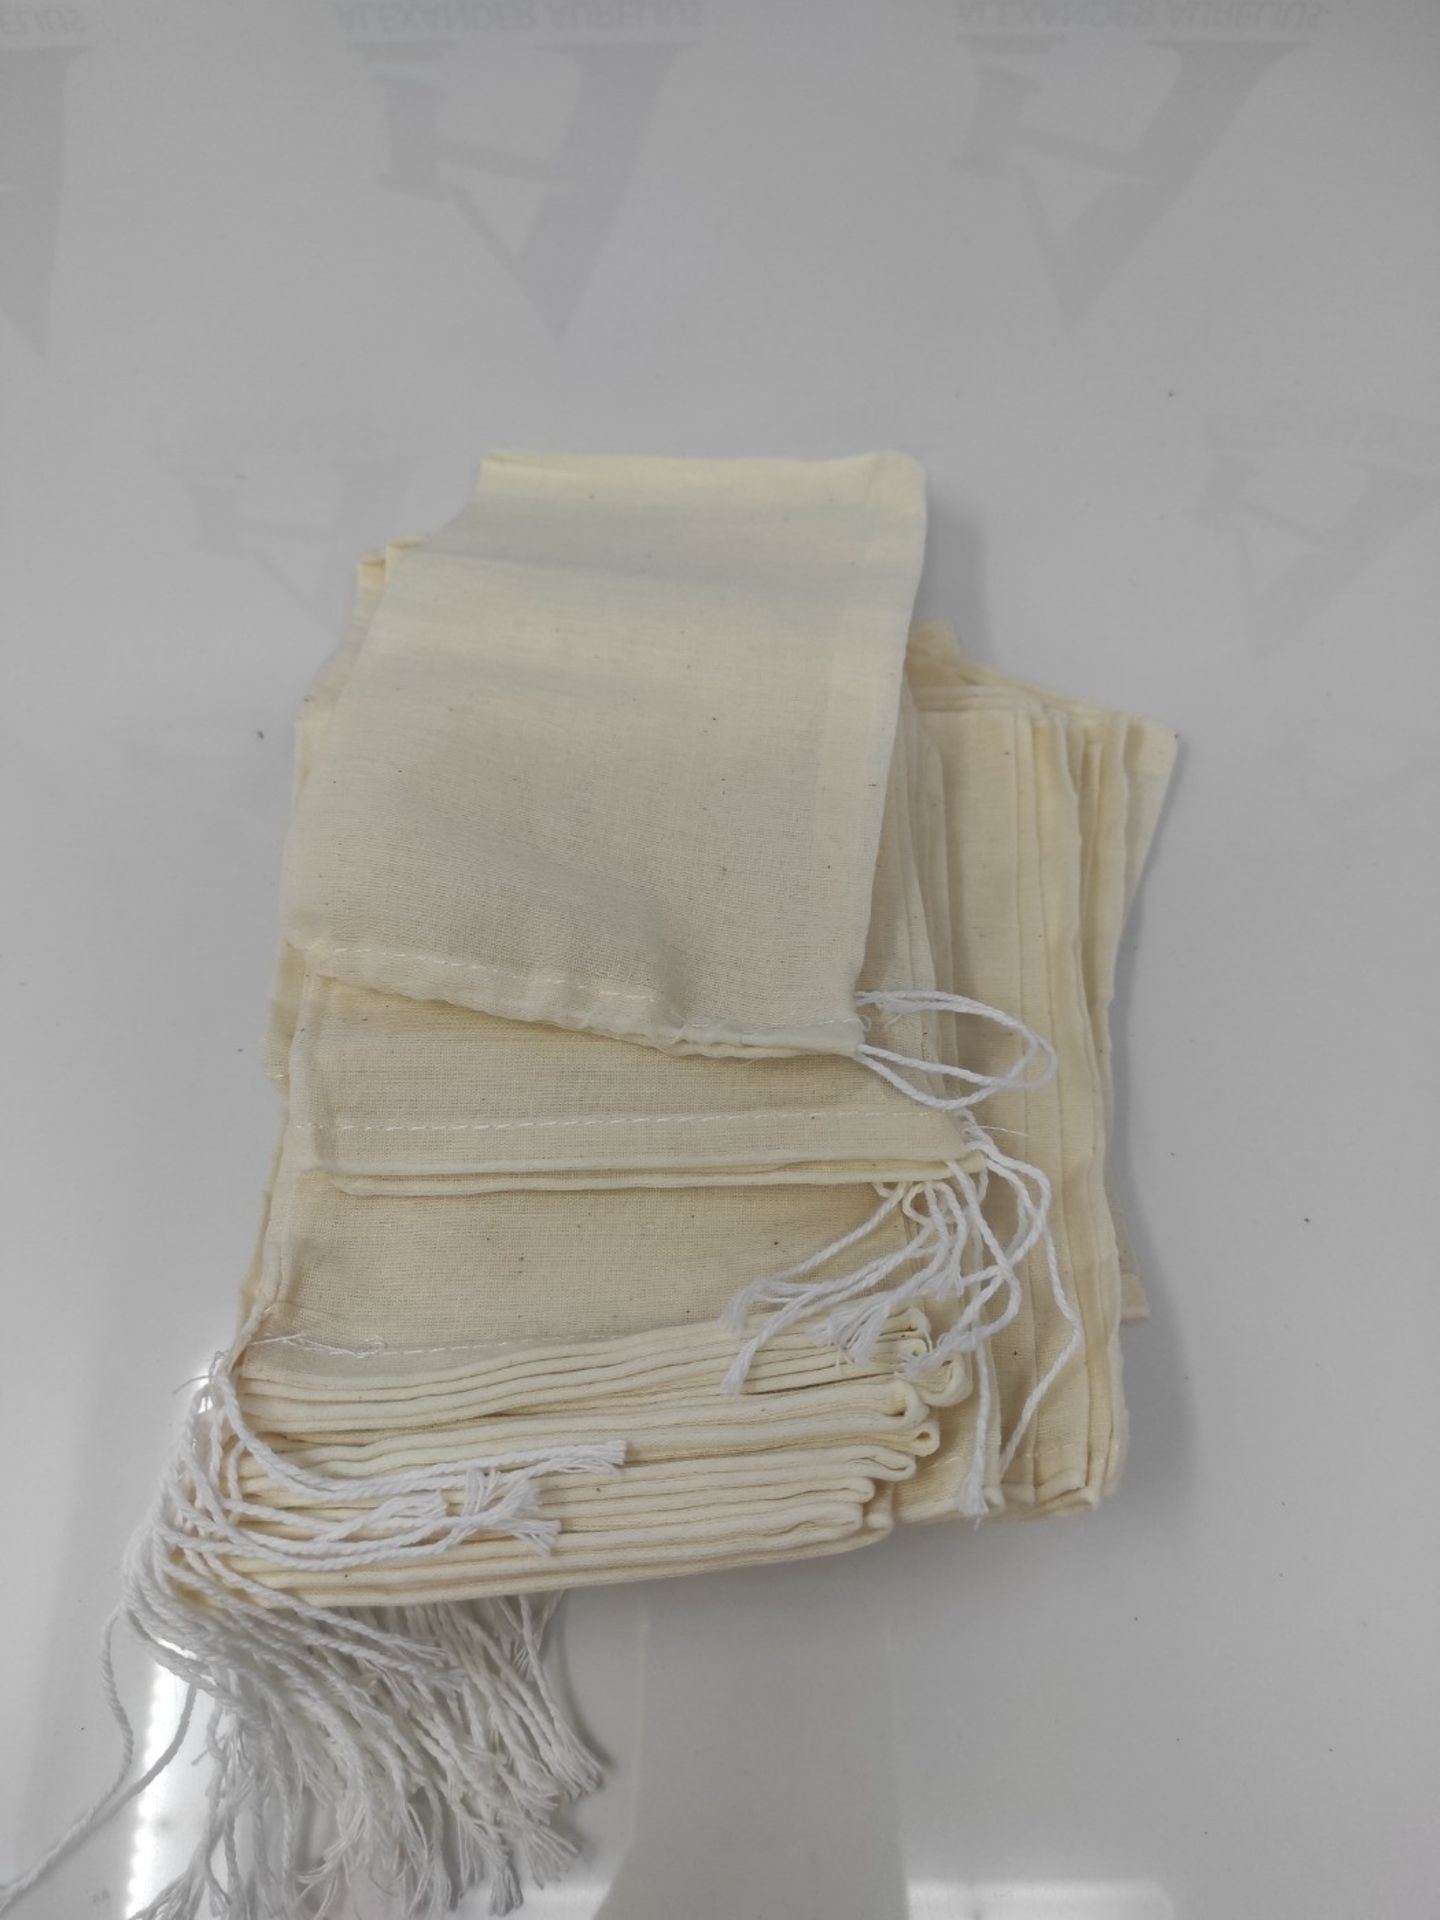 Tatuo 50 Pieces Cotton Drawstring Bags Muslin Bag Sachet Bag for Home Supplies